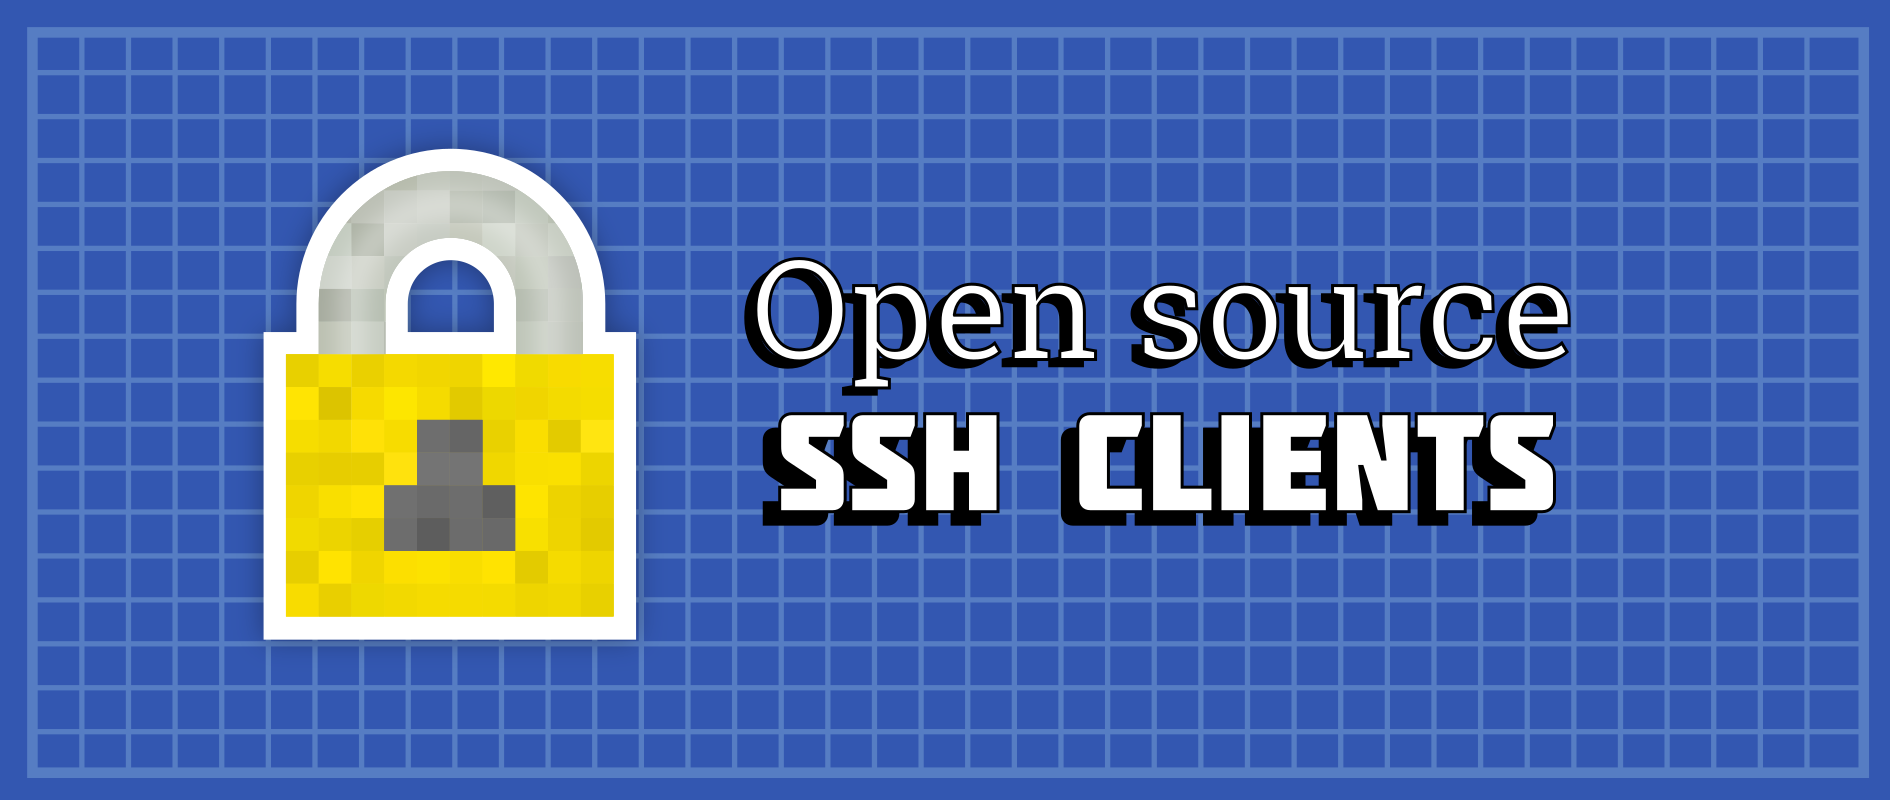 Open source SSH client alternatives in Fedora